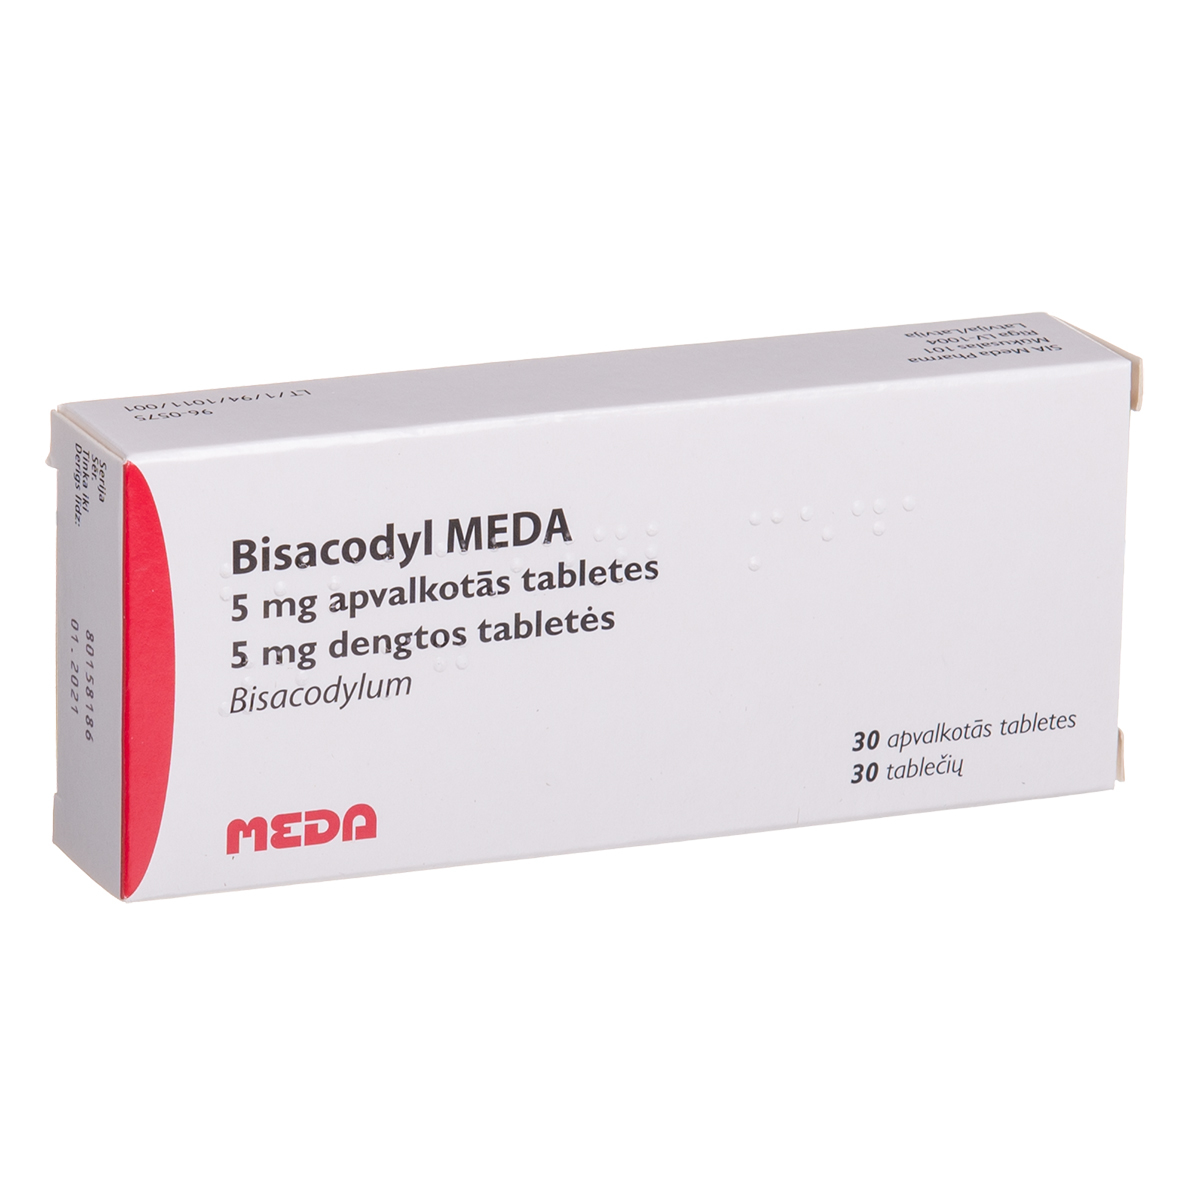 BISACODYL MEDA, 5 mg, dengtos tabletės, N30